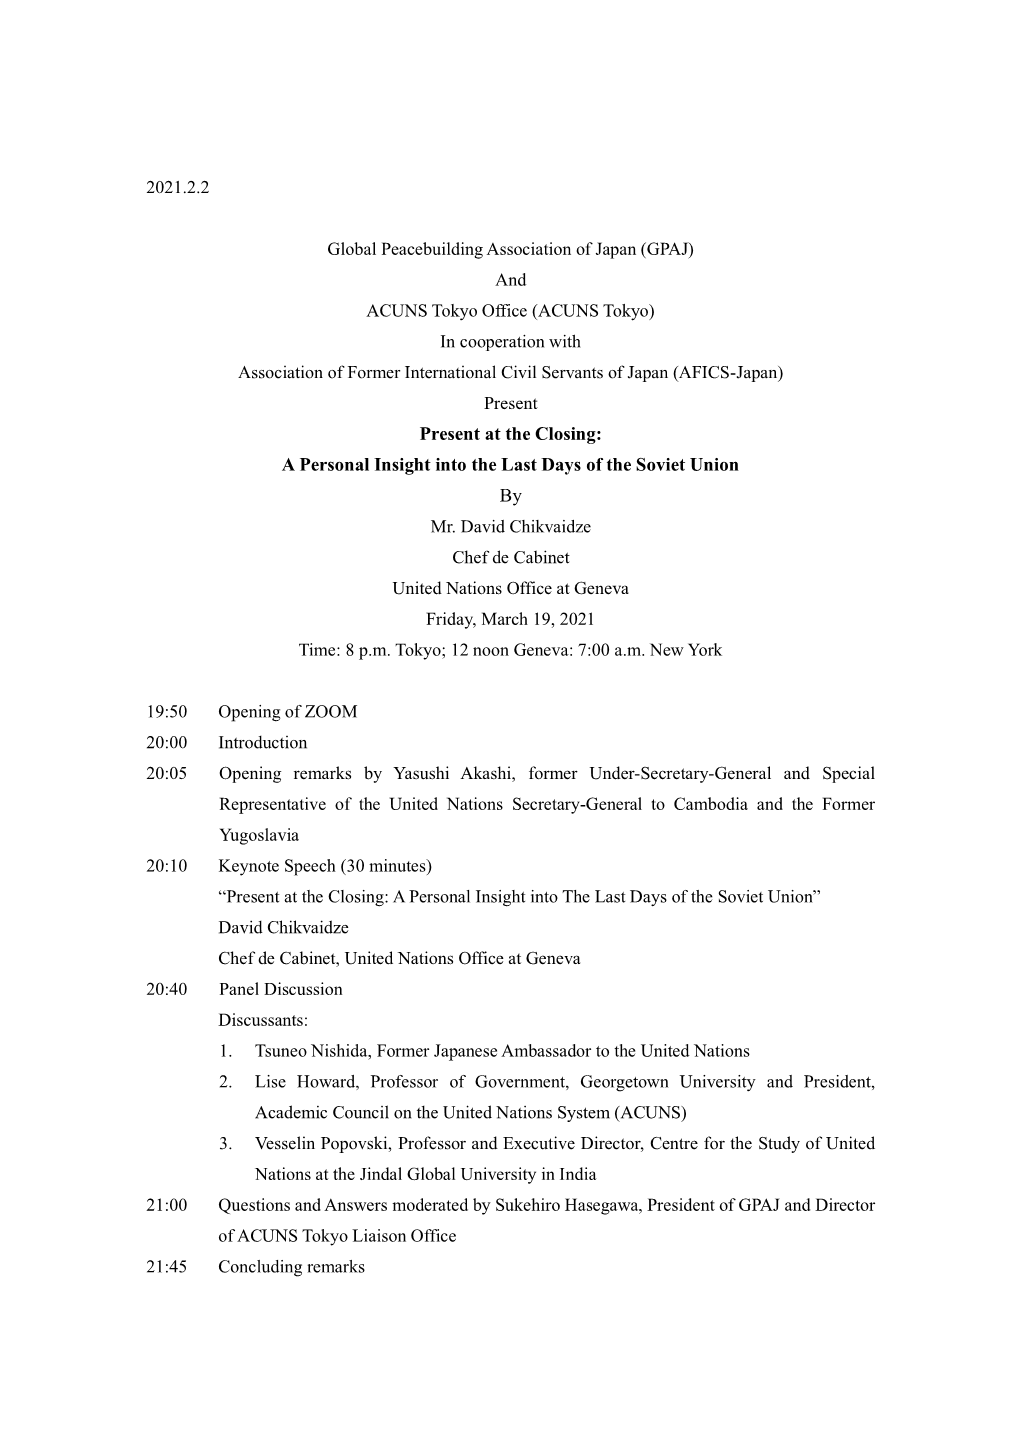 The PDF File of the Program